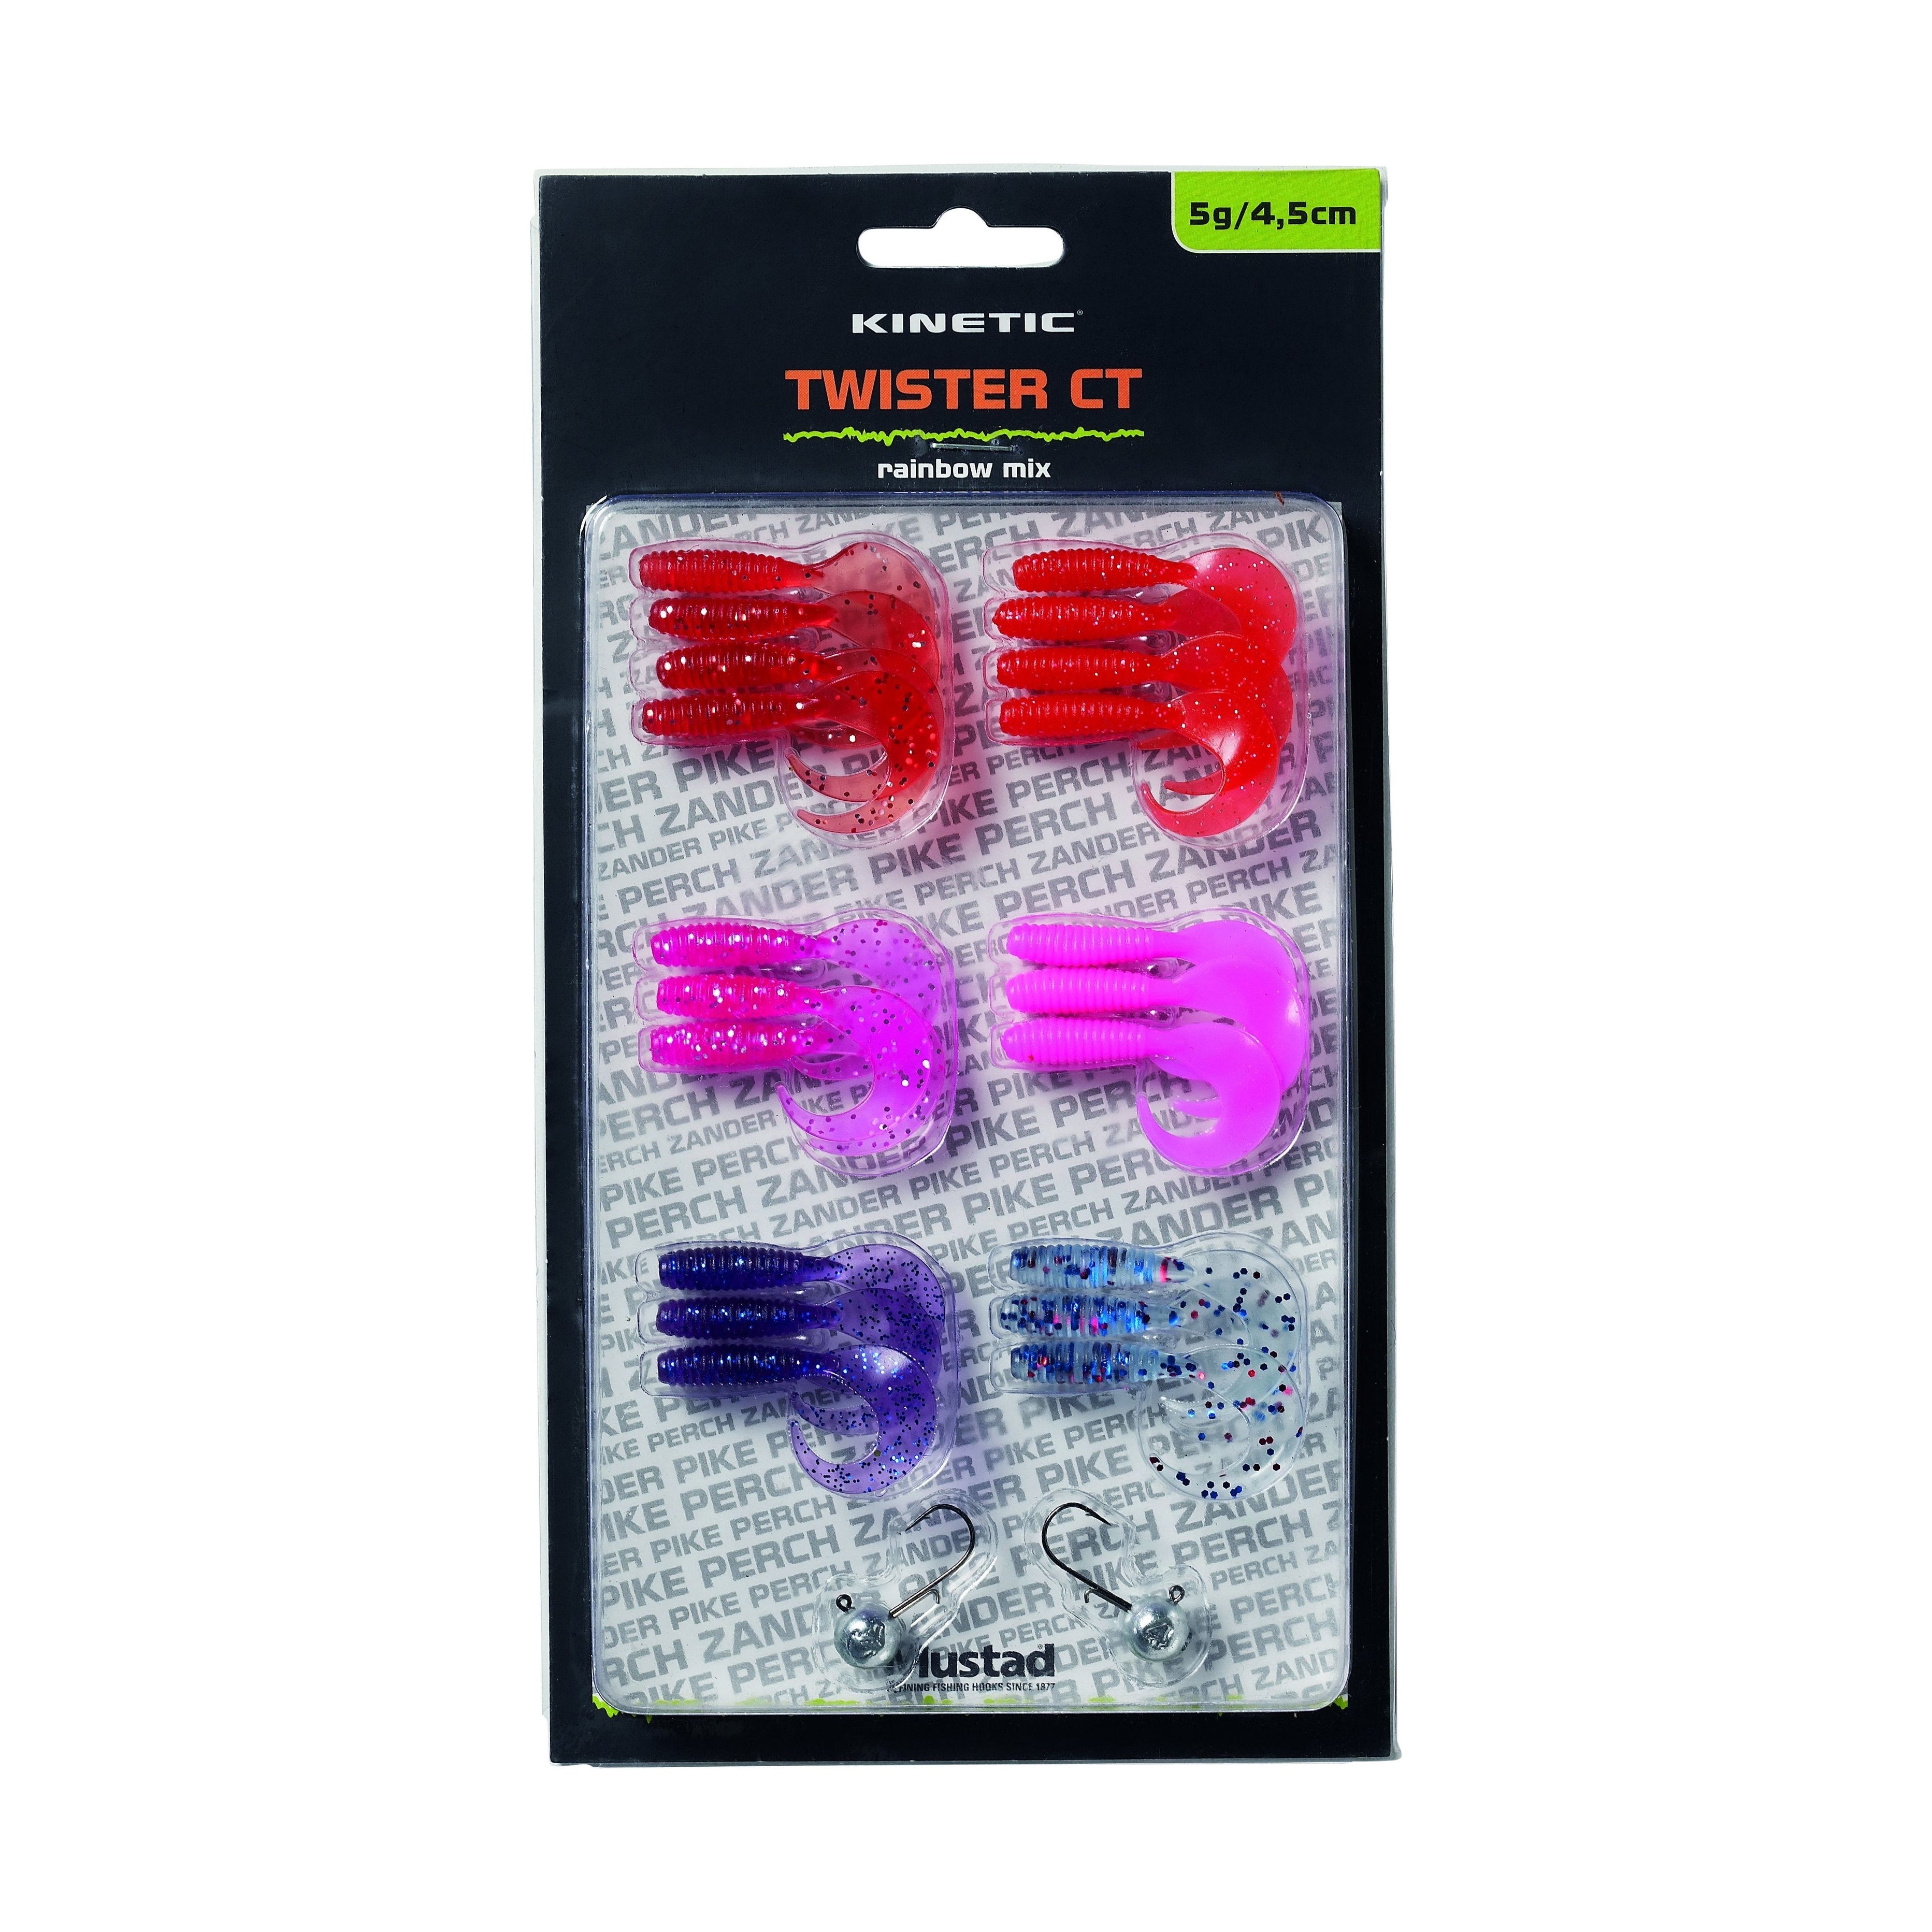 Kinetic Twister Ct 5G 4.5cm Rainbow Mix